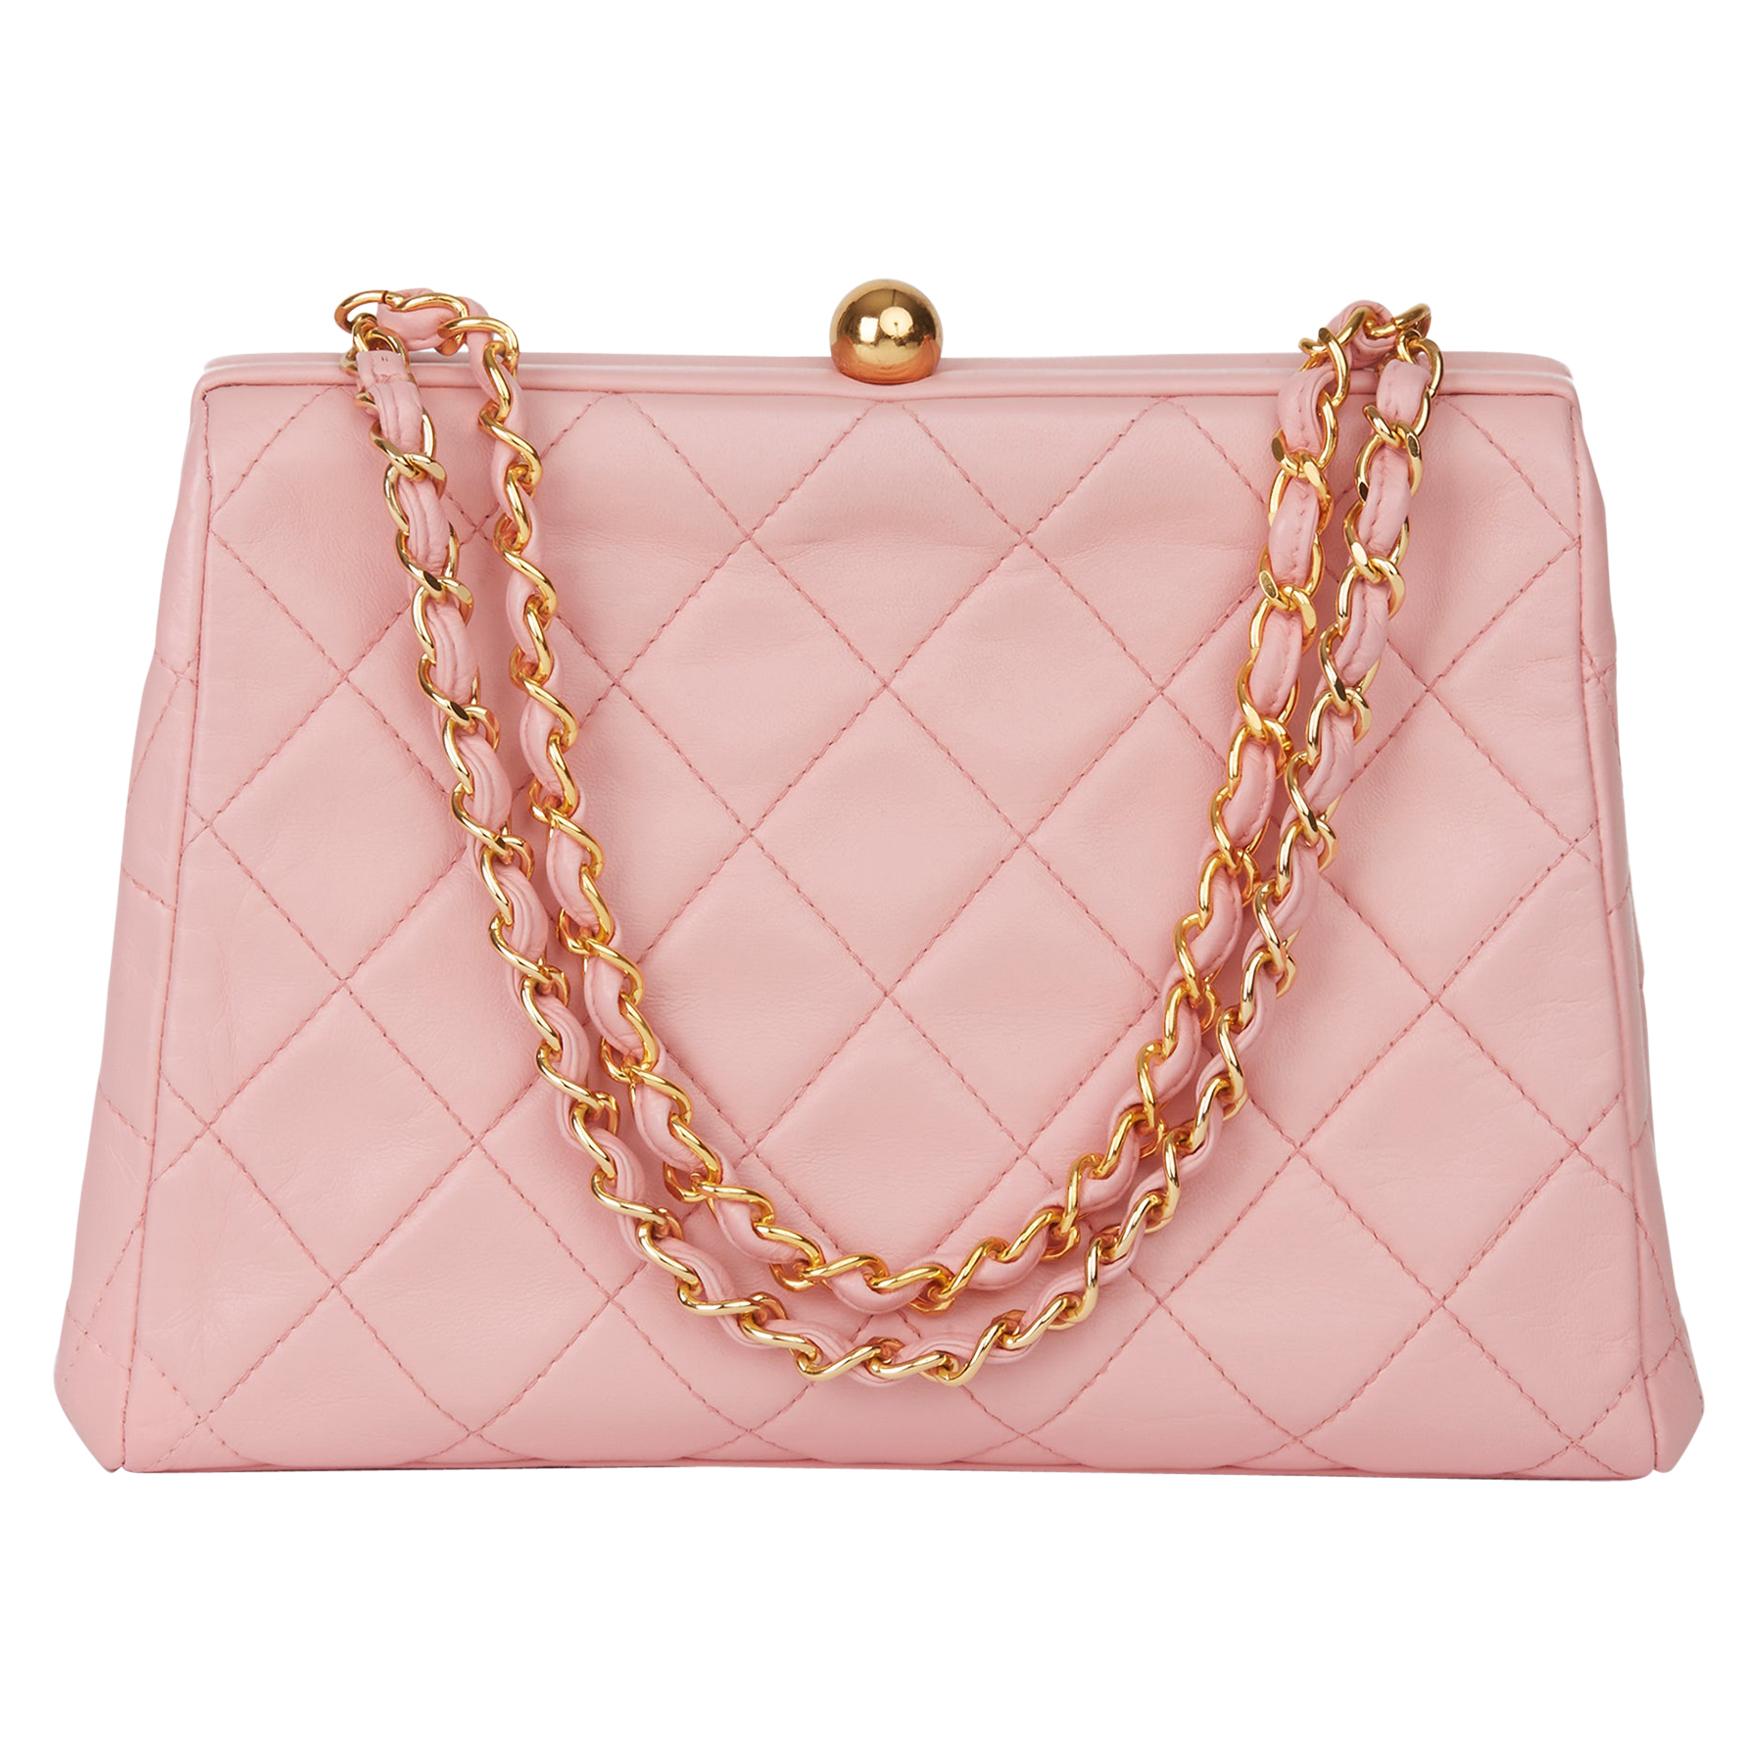 1994 Chanel Pink Quilted Lambskin Vintage Timeless Frame Bag